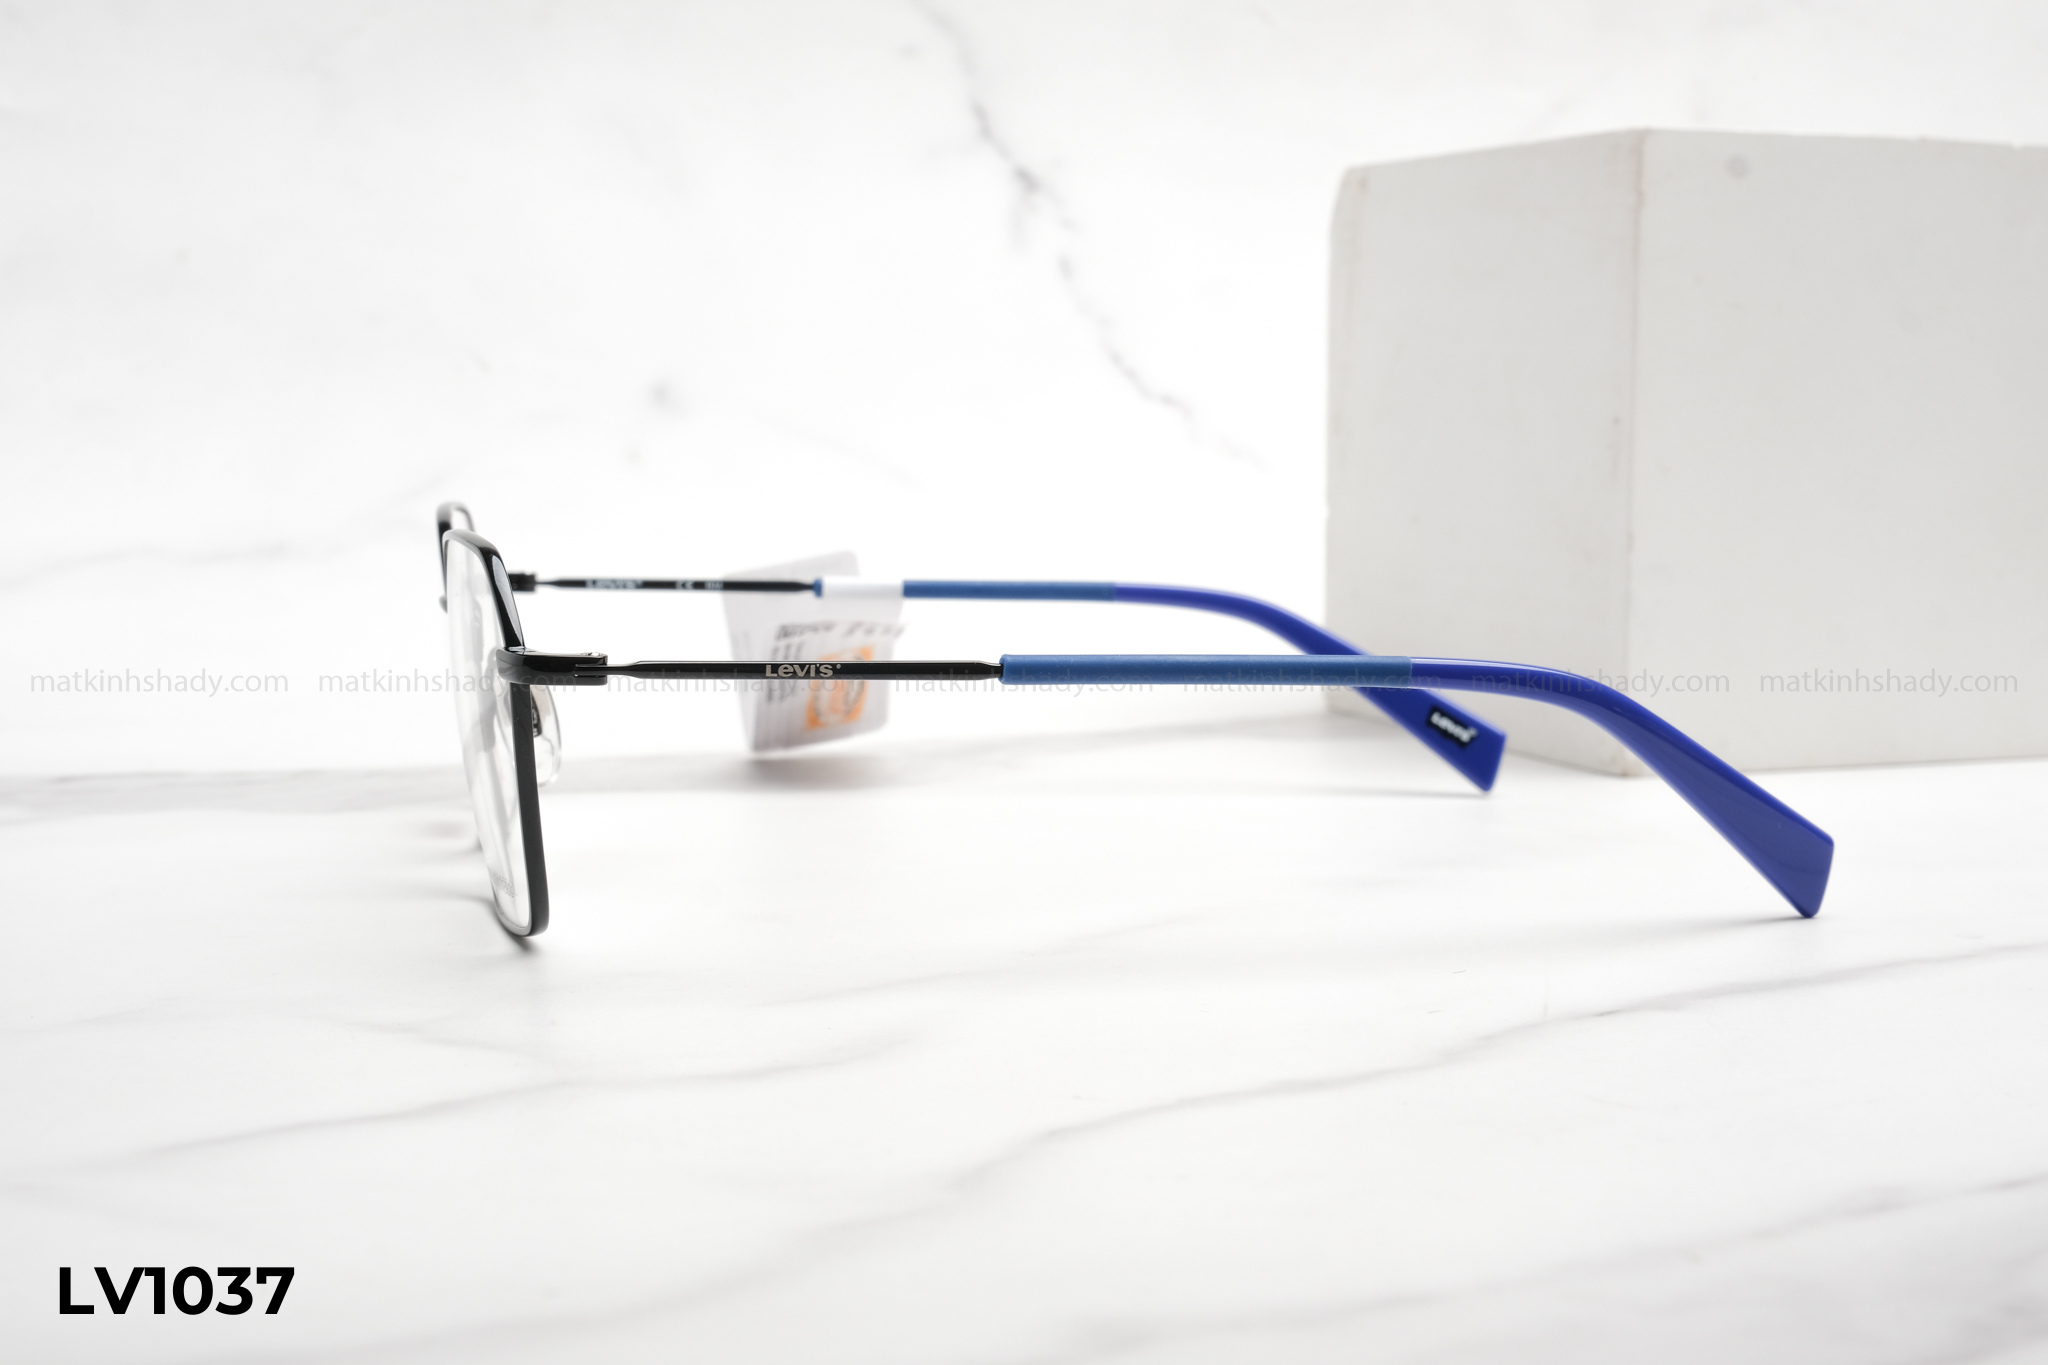  Levi's Eyewear - Glasses - LV1037 